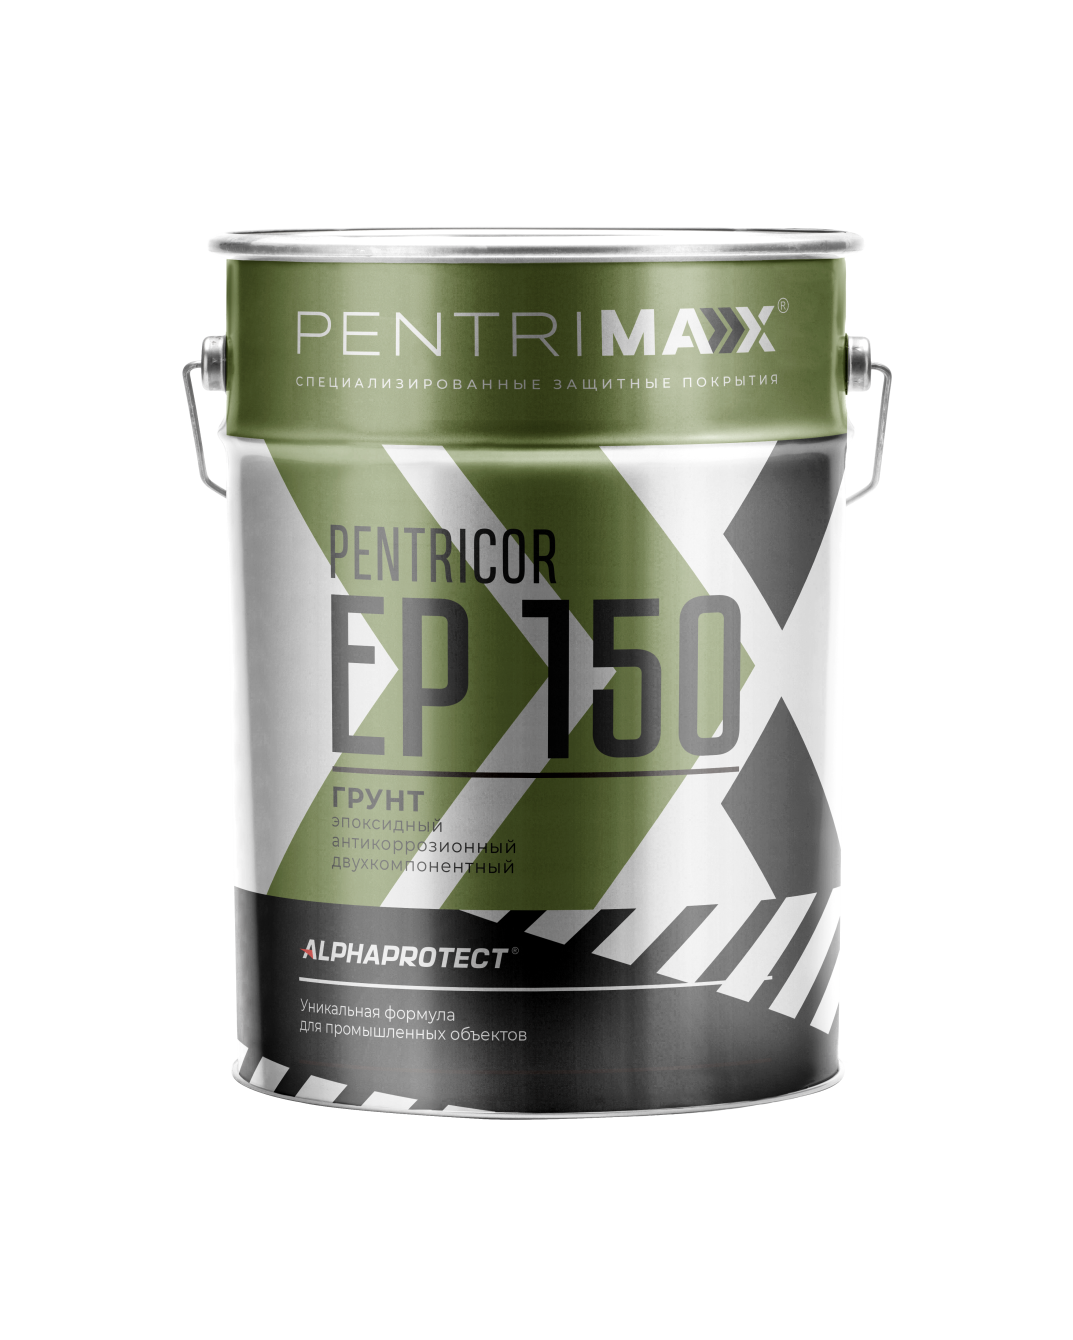 Эпоксидный грунт для металла PENTRICOR EP 150